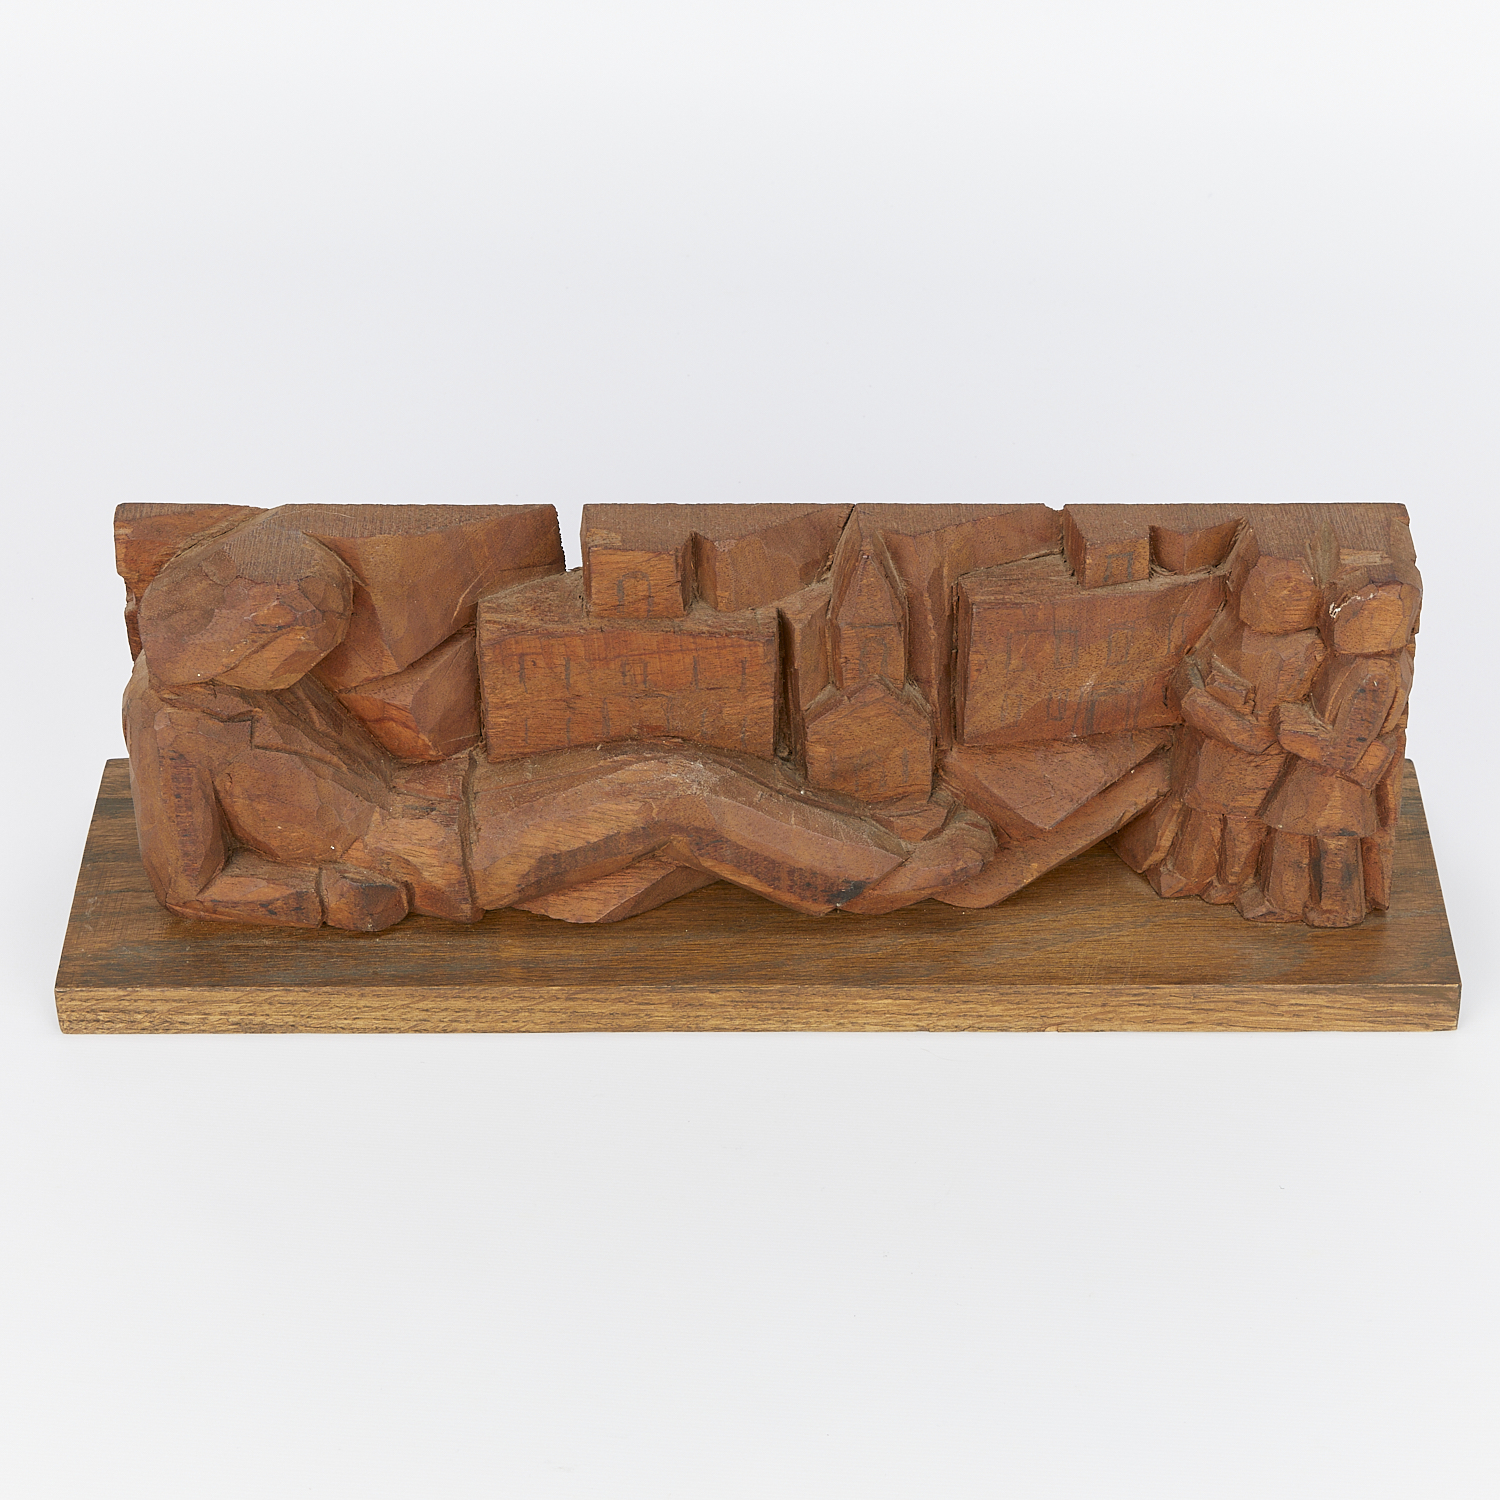 John Rood Carved Wooden Sculpture - Image 8 of 10